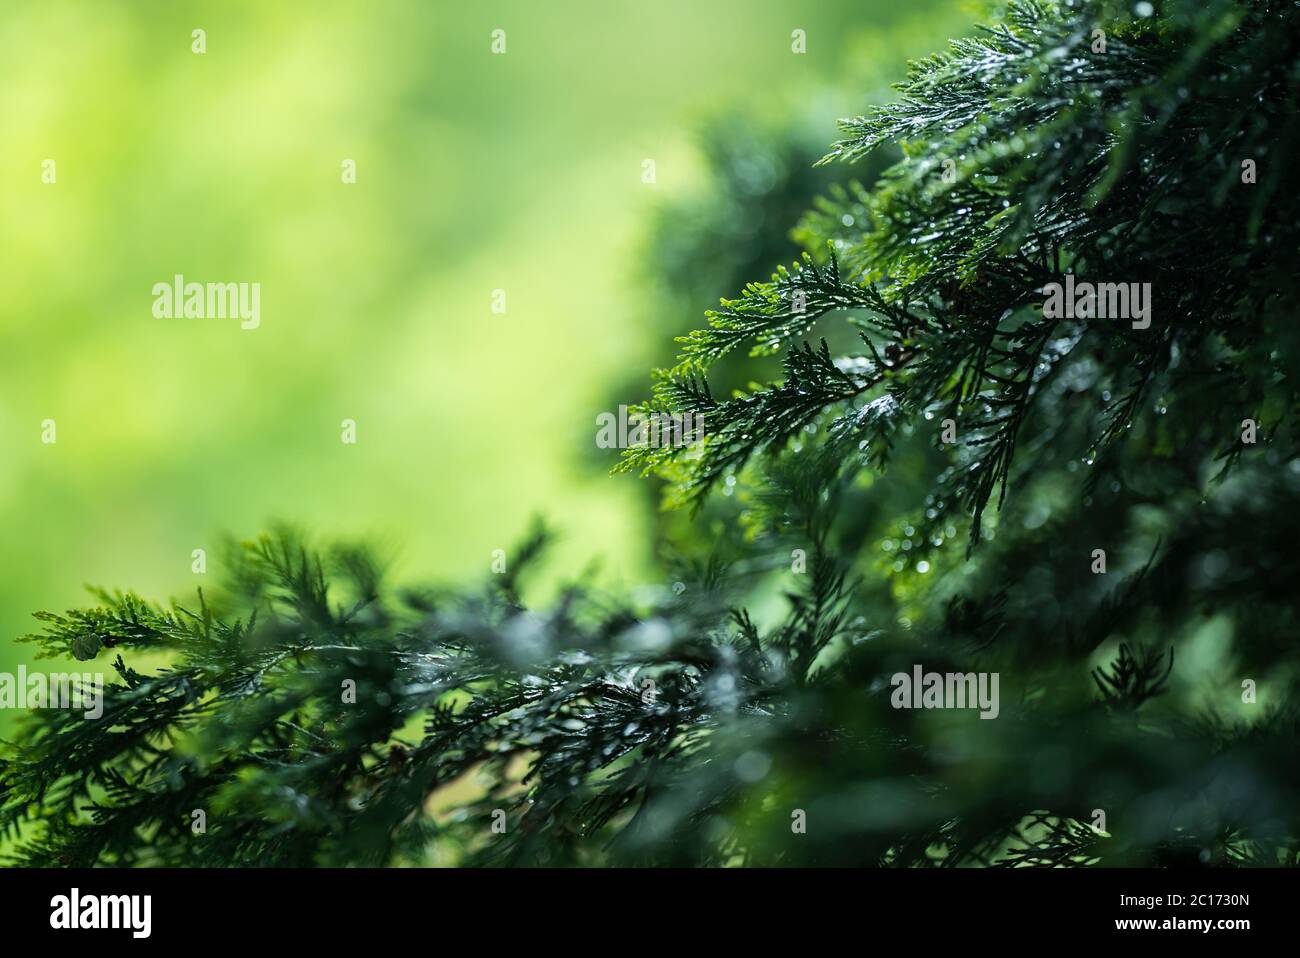 Wet fresh green thuja. It is raining. Stock Photo